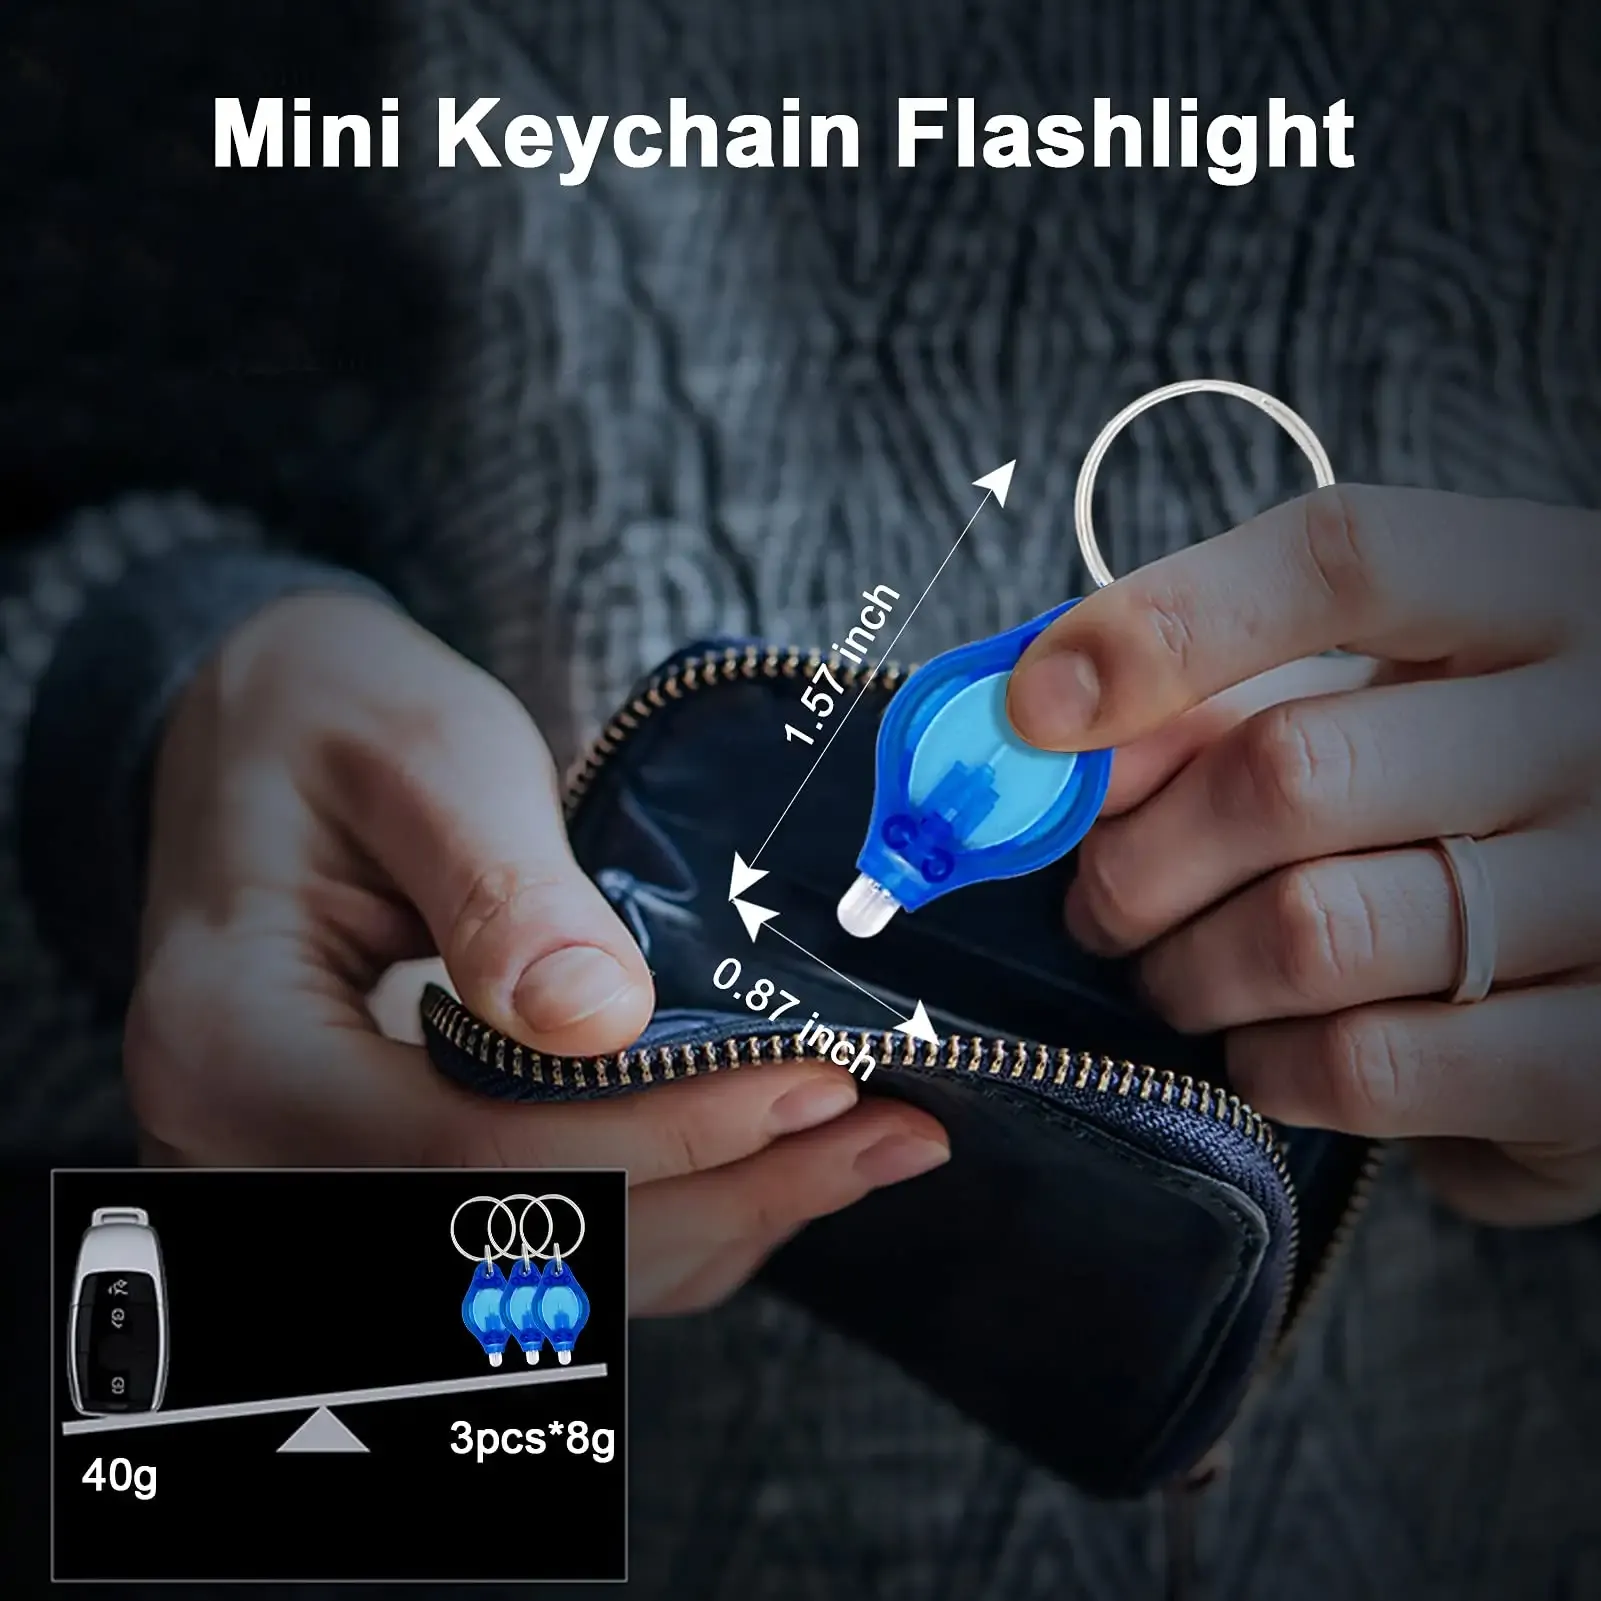 keychain flashlight mini flashlight keychain ultra bright led handheld flashlights for camping hiking fishing walk the dog and emergency white light with shell